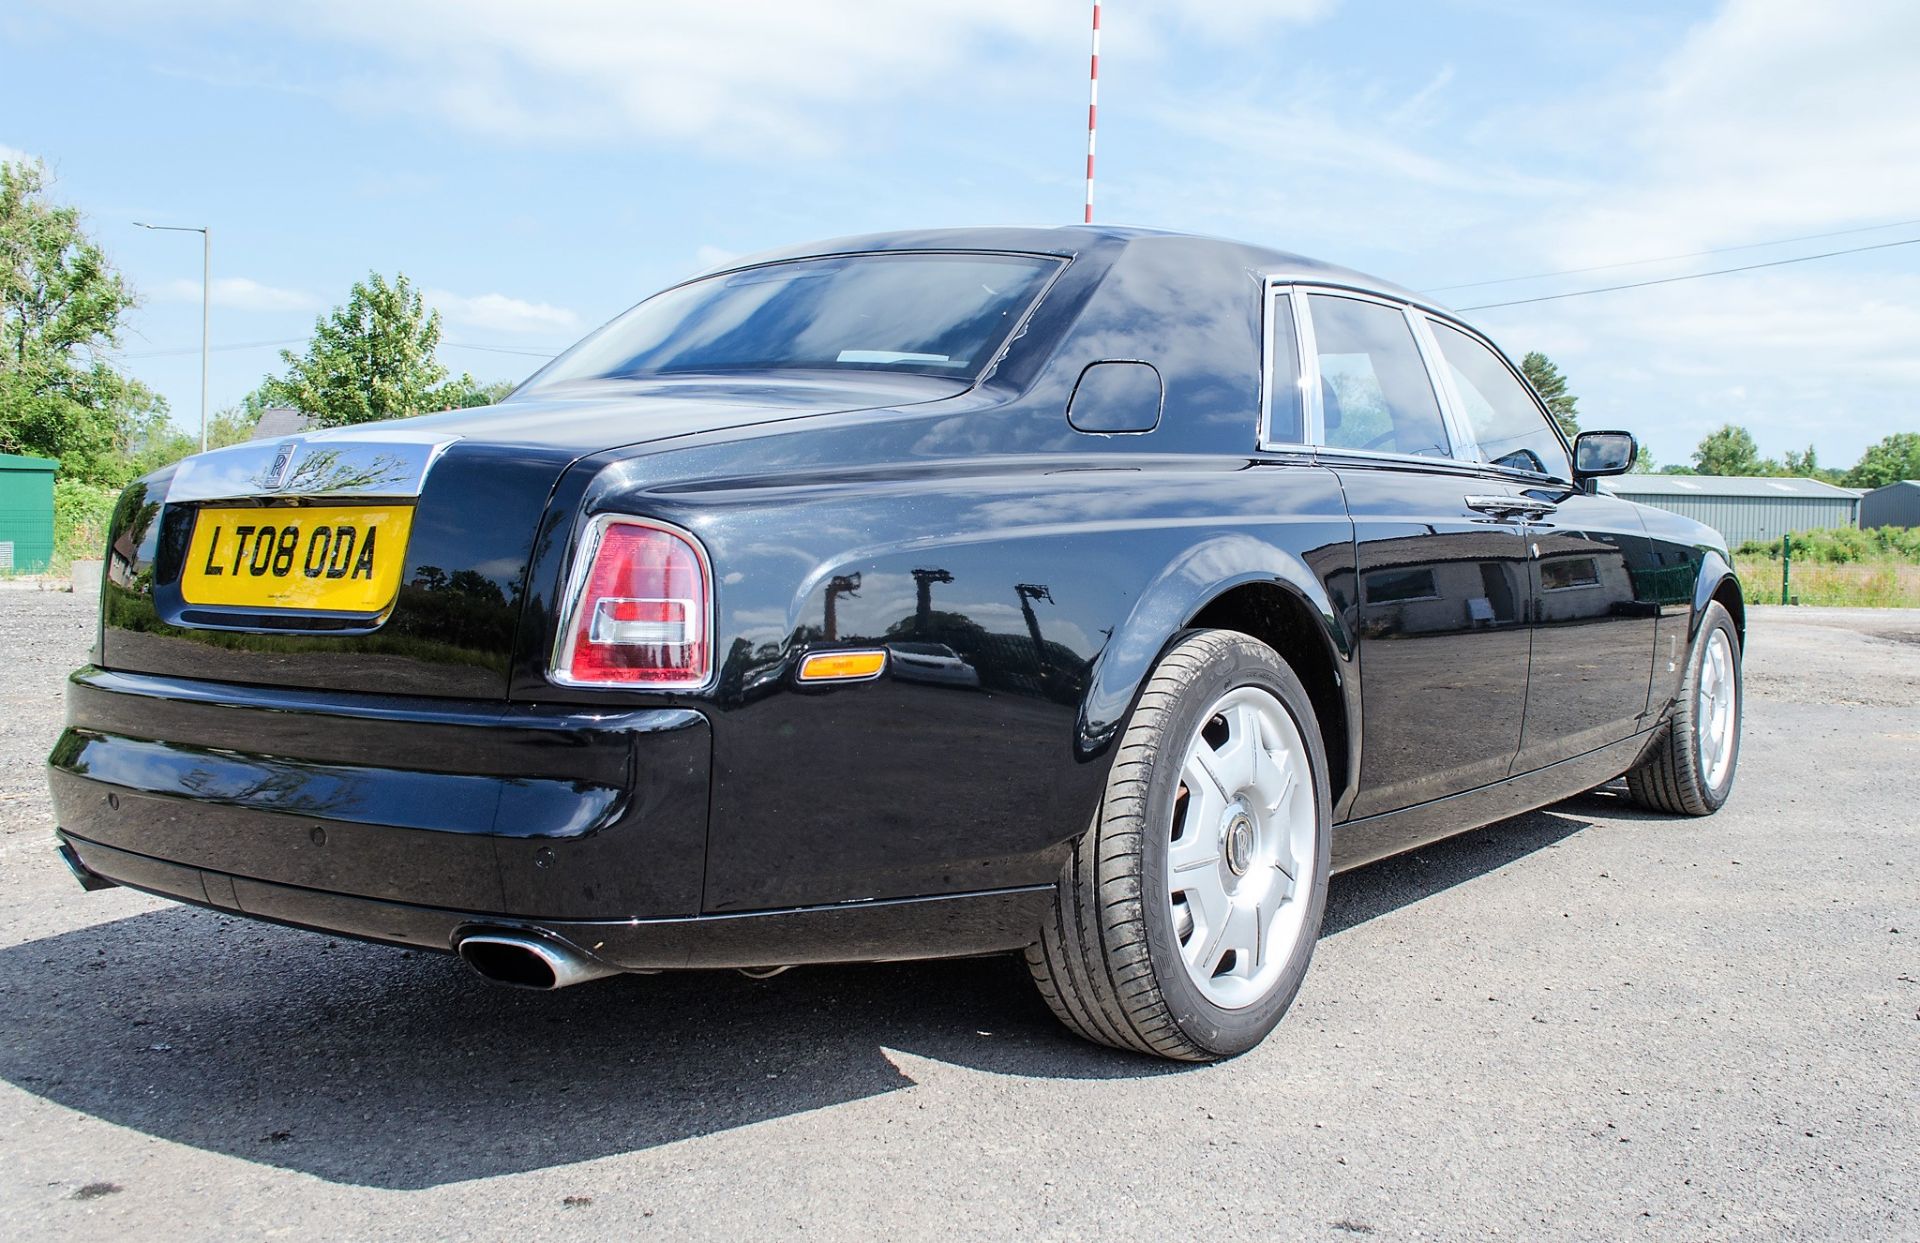 Rolls Royce Phantom VII 6.75 litre petrol 4 door saloon car  Reg No: LT 08 ODA Date of Registration: - Image 8 of 44